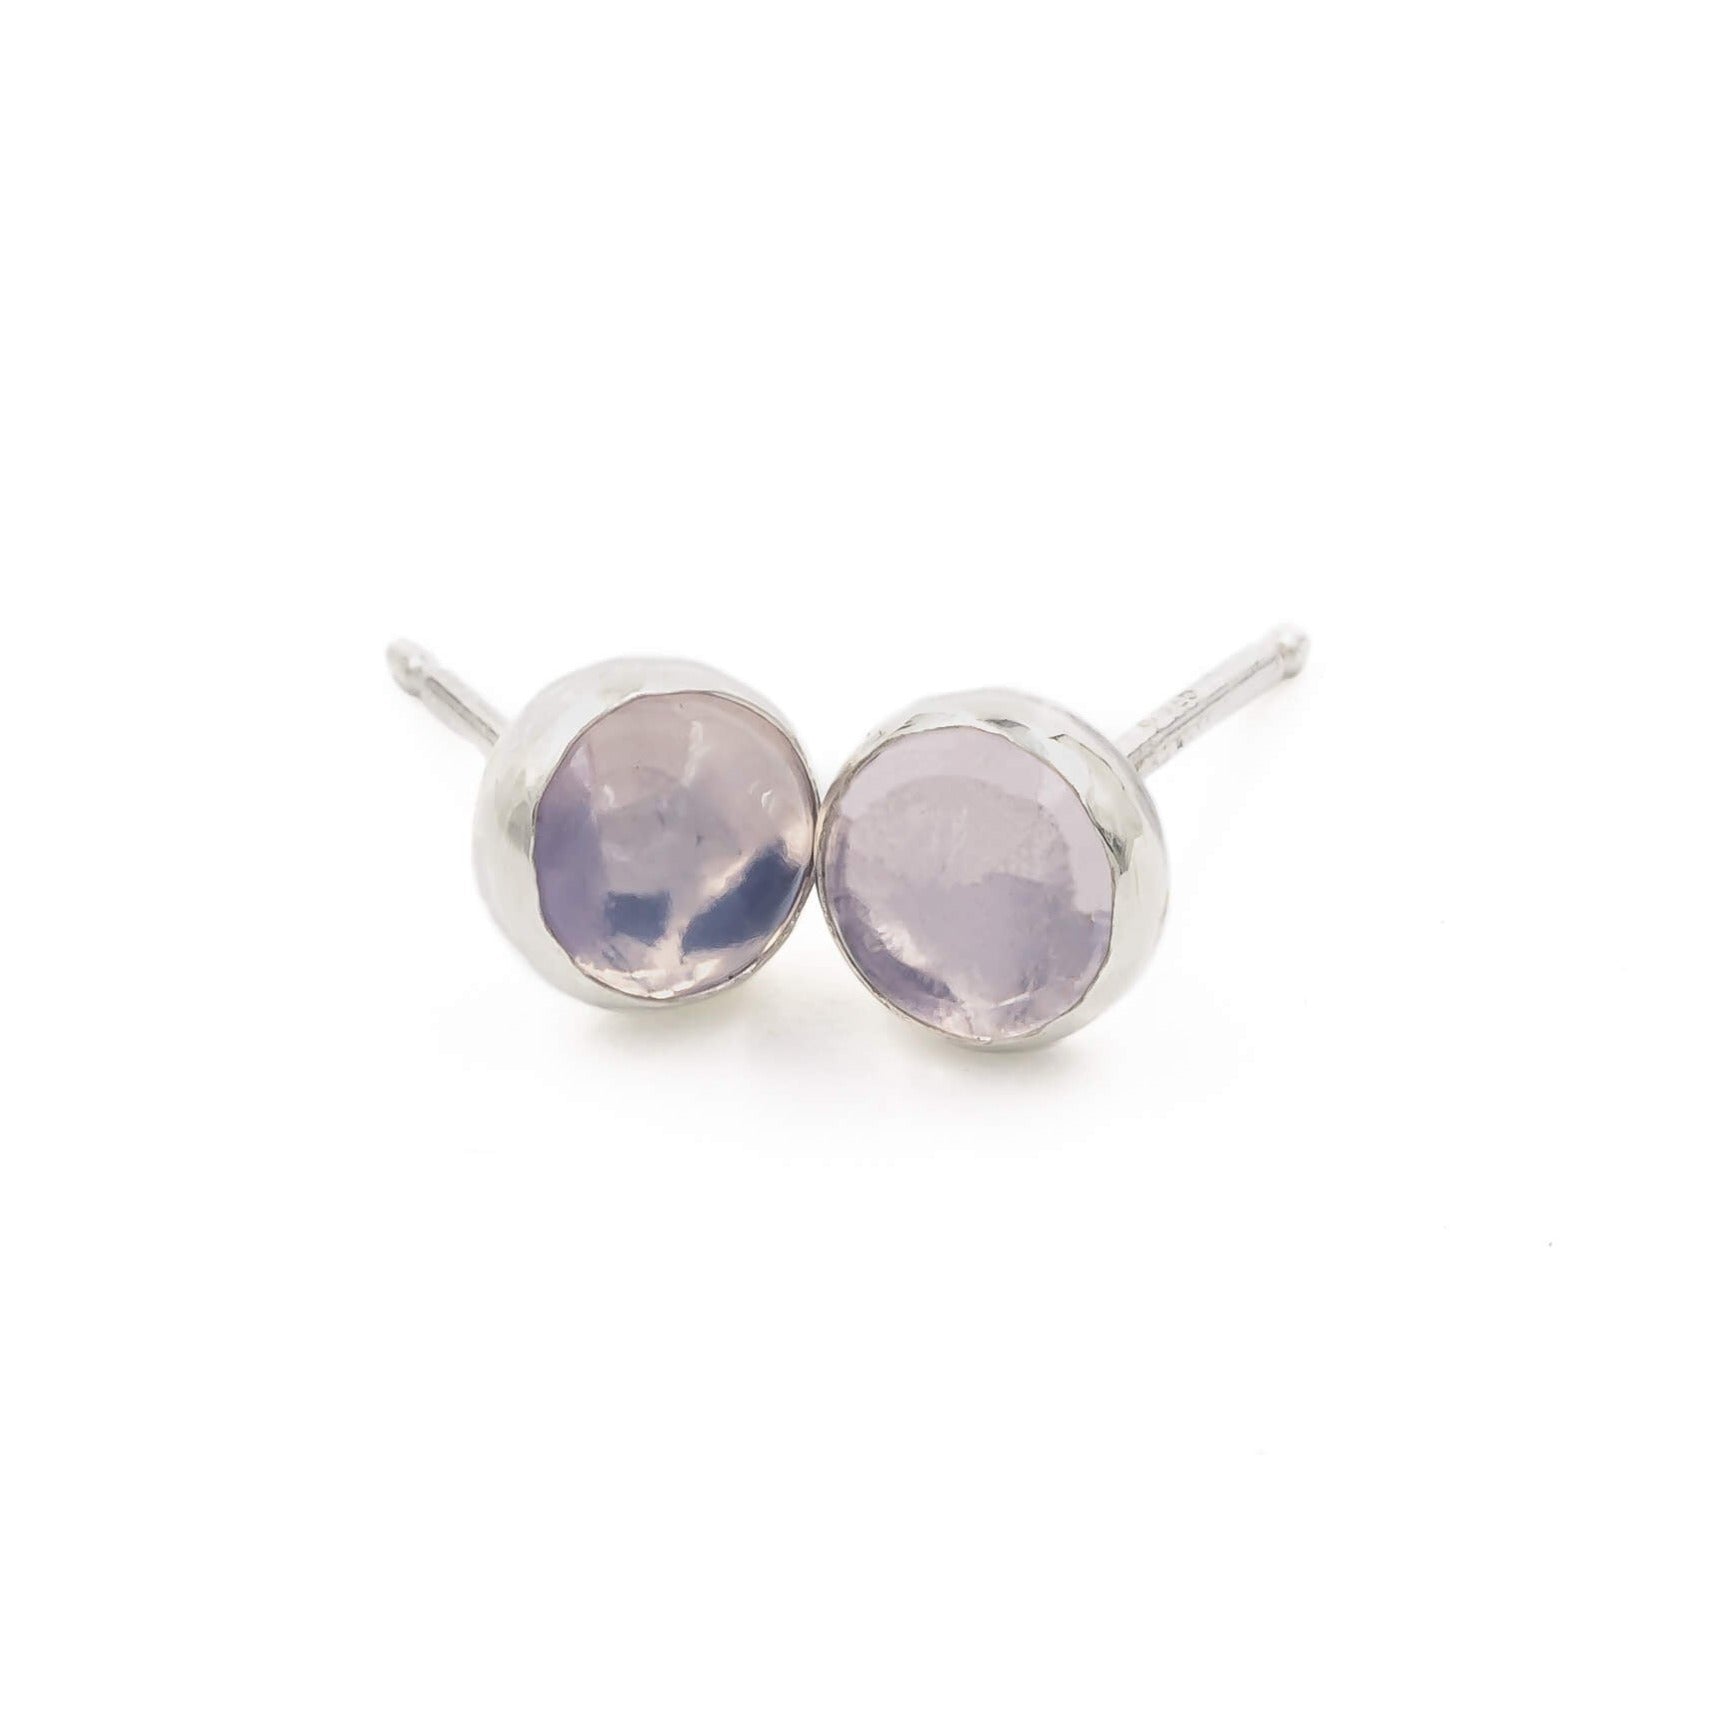 6mm lavender quartz stud earrings in sterling silver